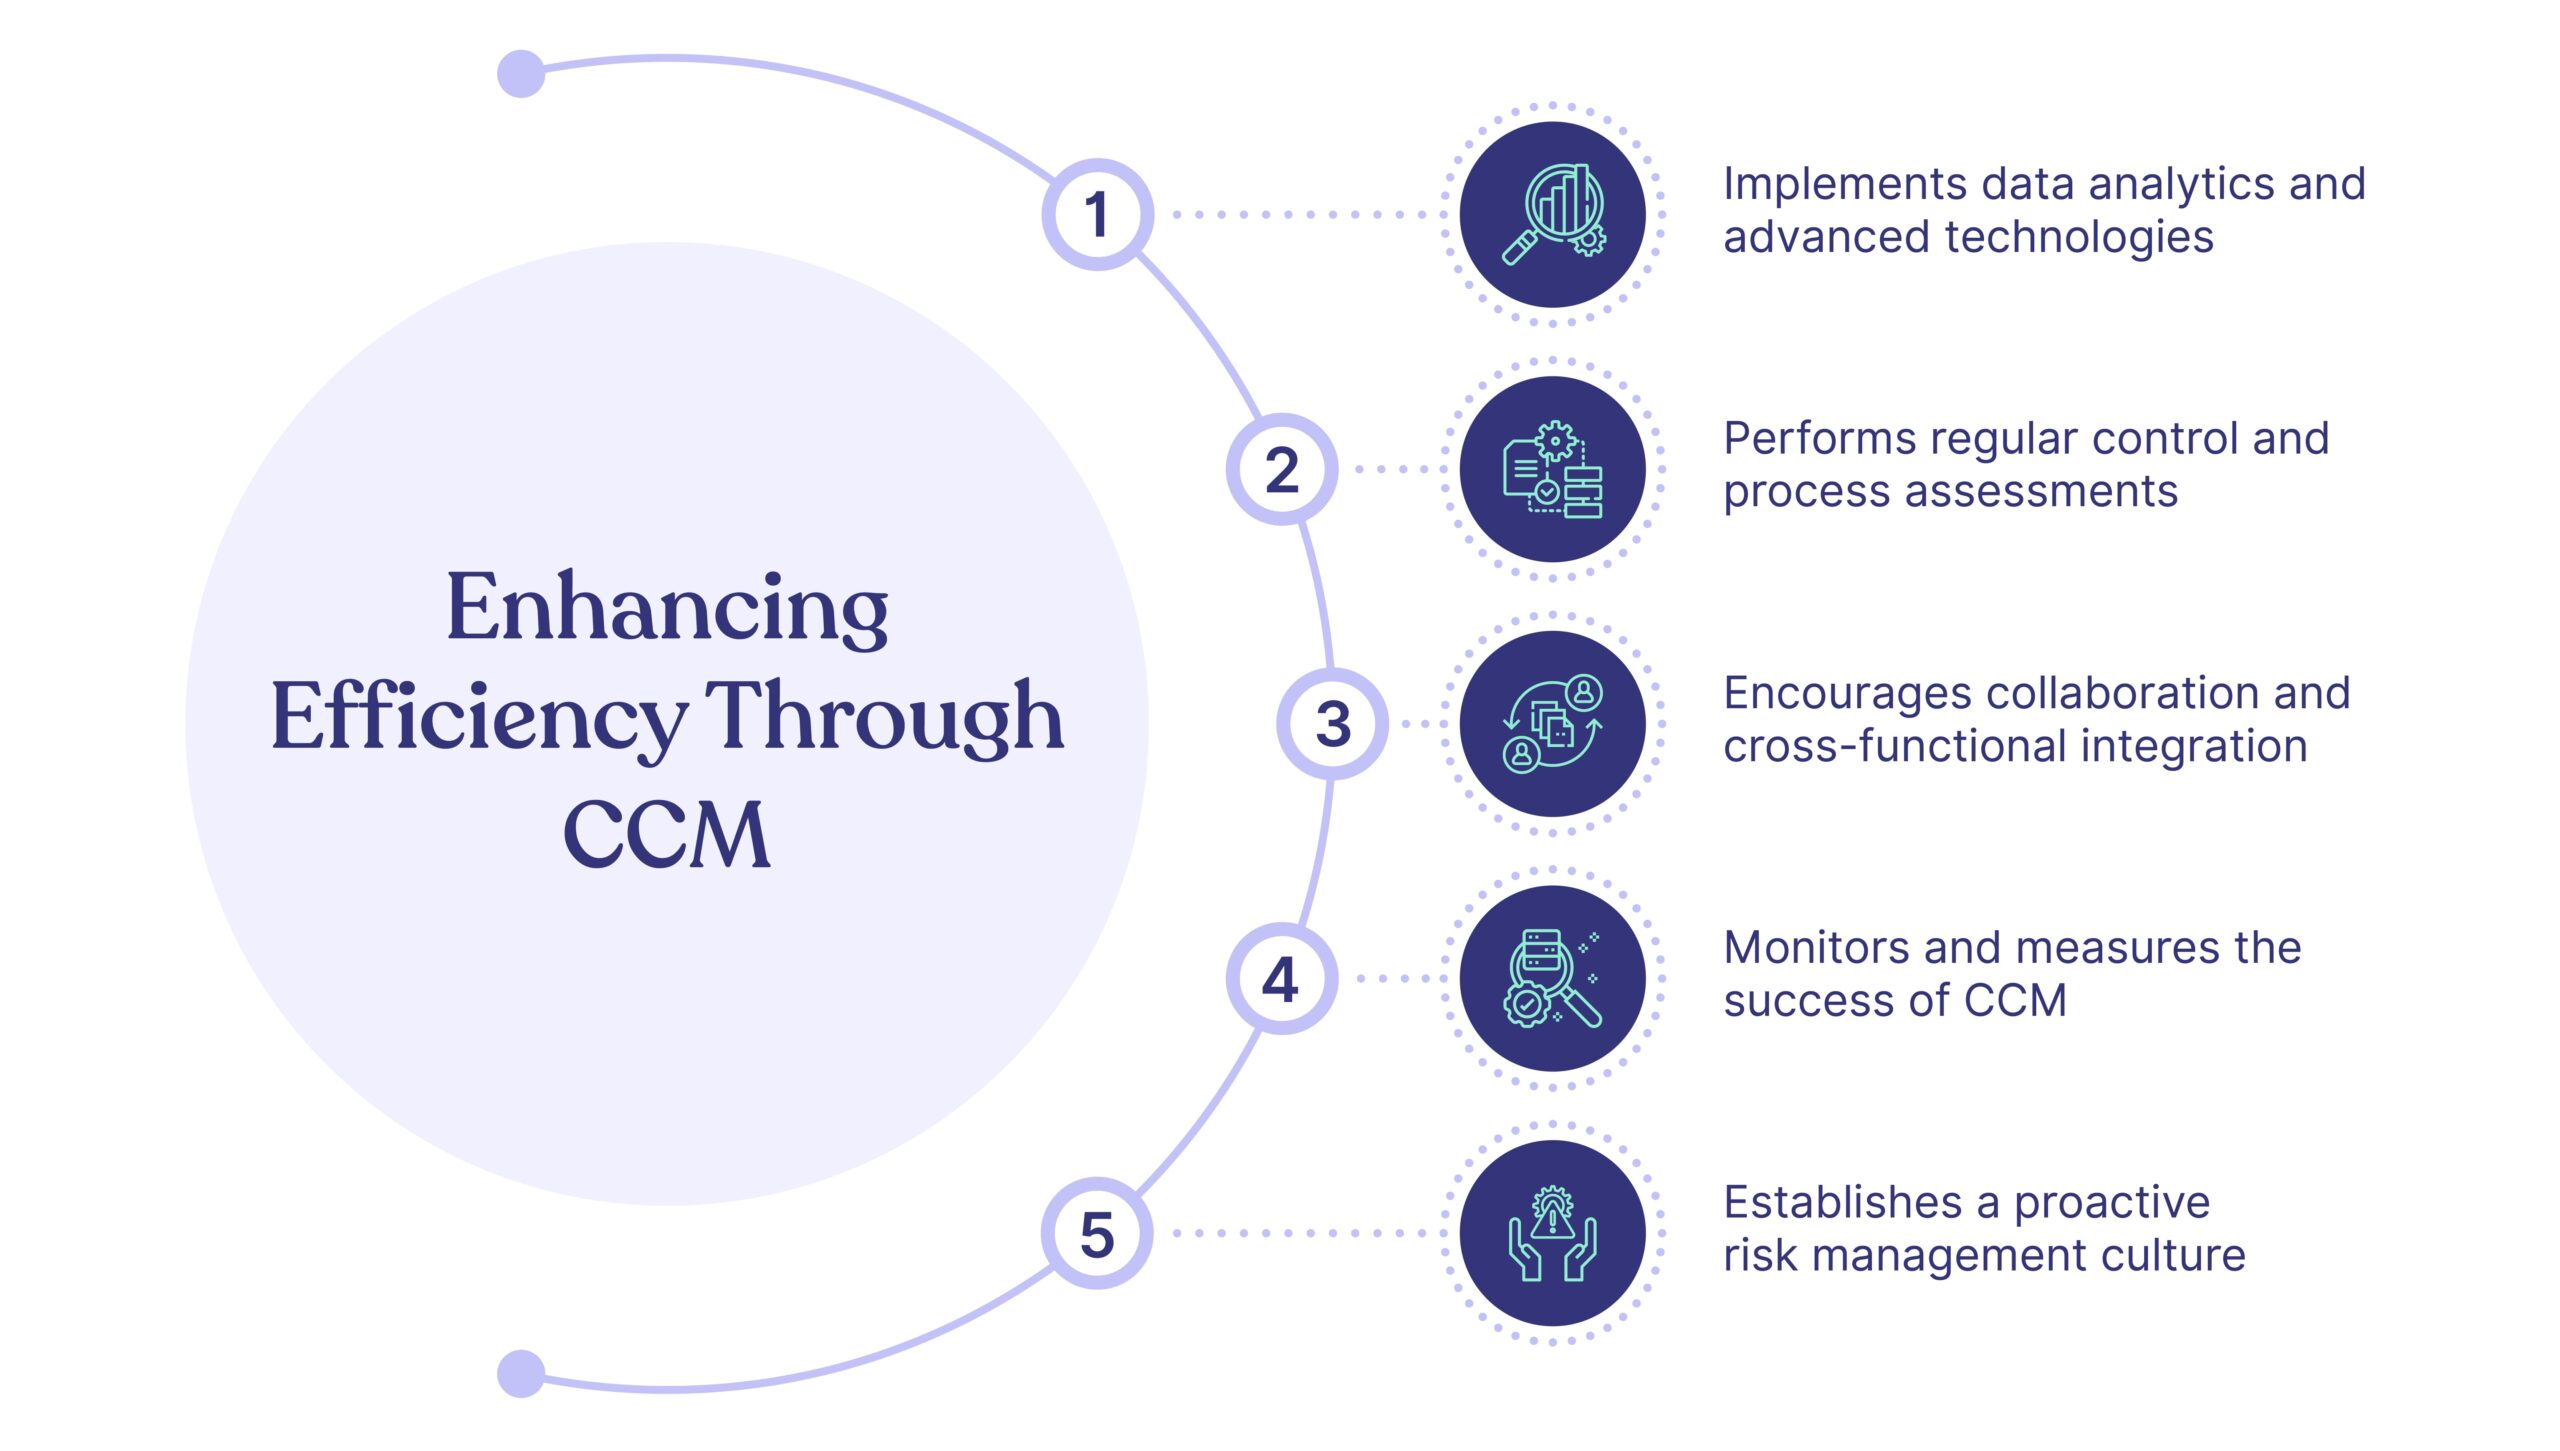 Enhancing Efficiency Through CCM
